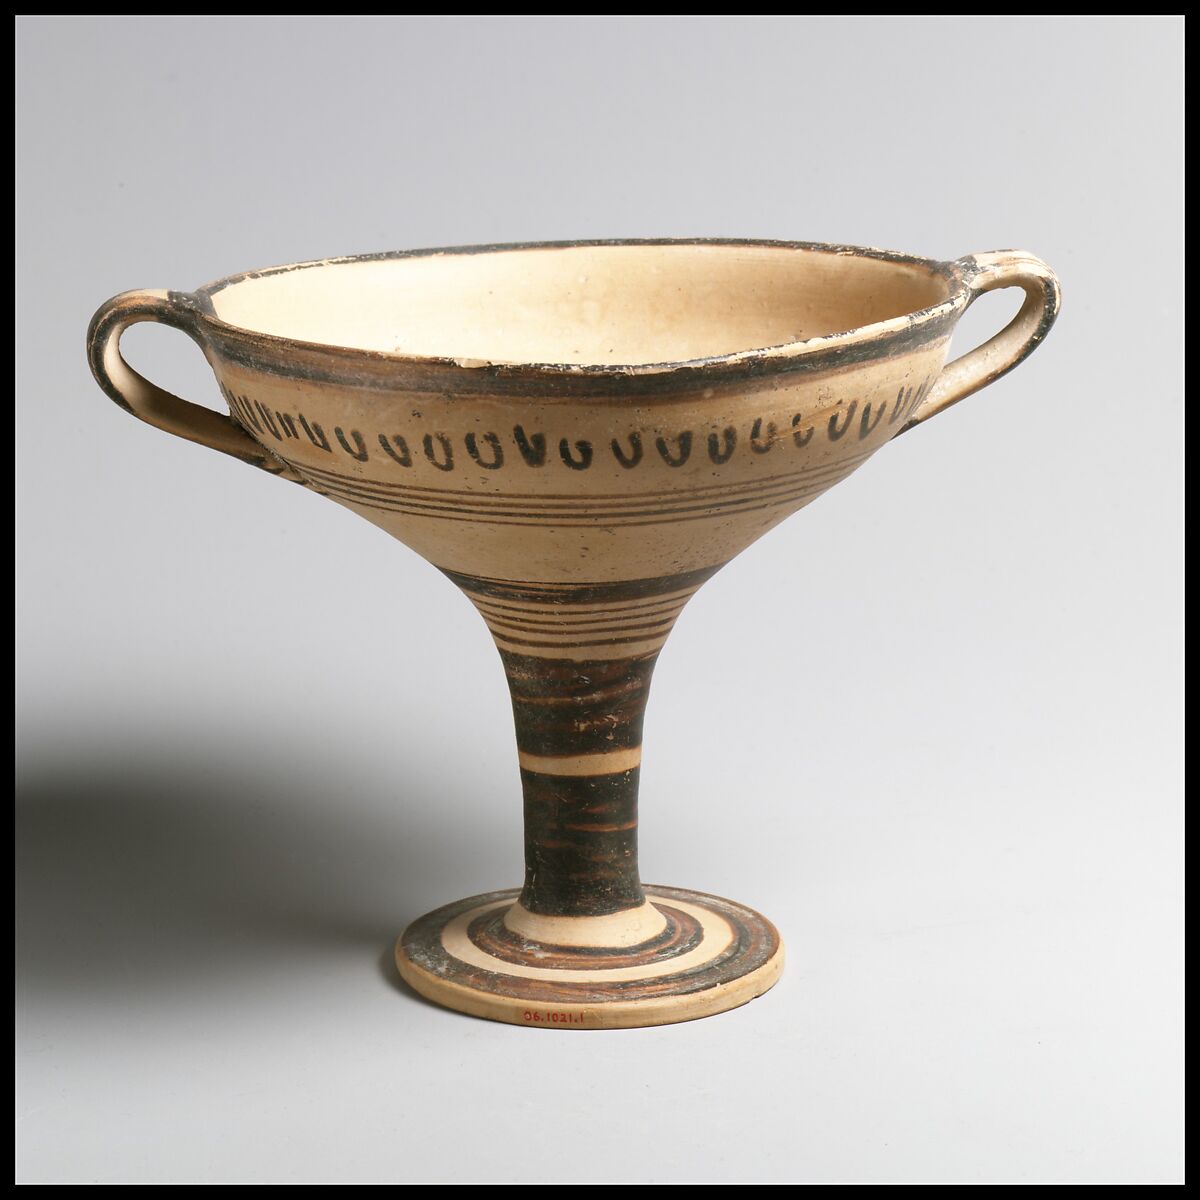 Terracotta kylix (drinking cup), Terracotta, Mycenaean 